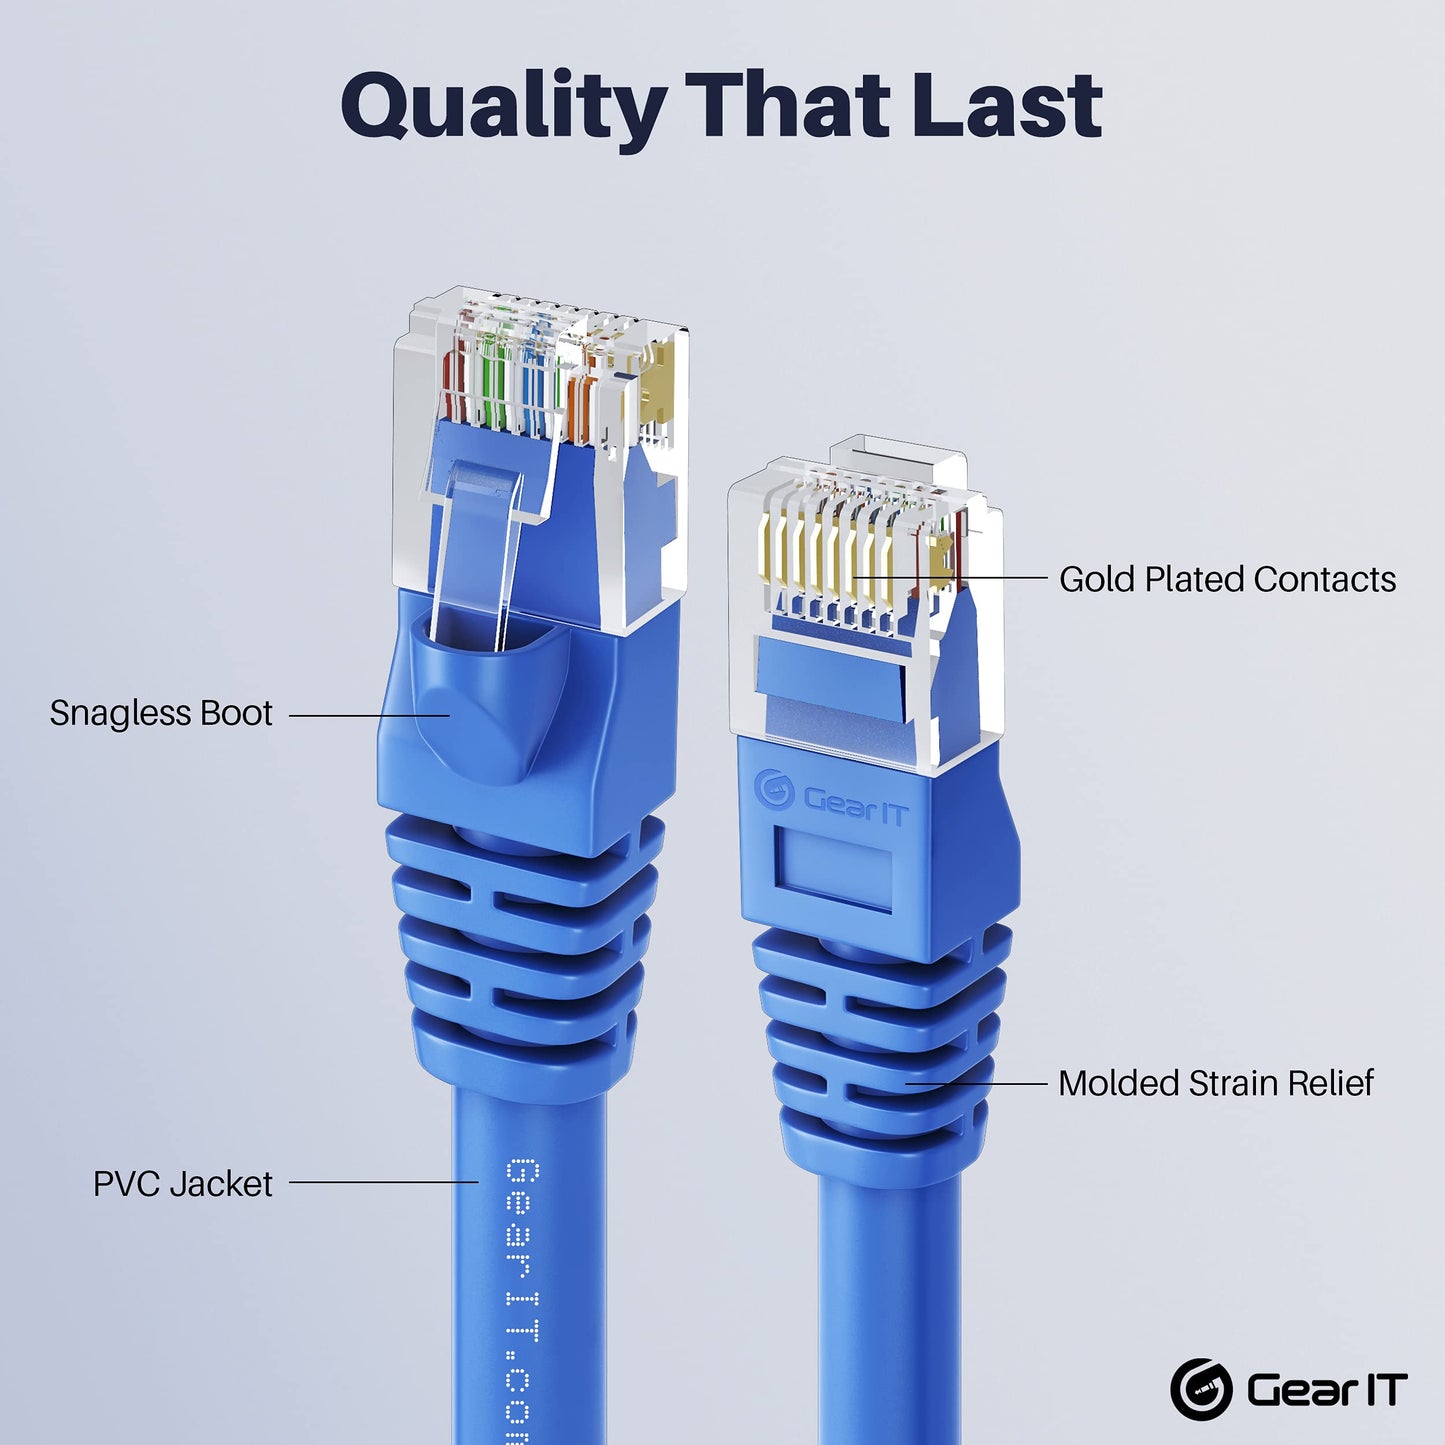 GearIT Cat 6 Ethernet Cable 1 ft (10-Pack) - Cat6 Patch Cable, Cat 6 Patch Cable, Cat6 Cable, Cat 6 Cable, Cat6 Ethernet Cable, Network Cable, Internet Cable - Blue 1 Foot